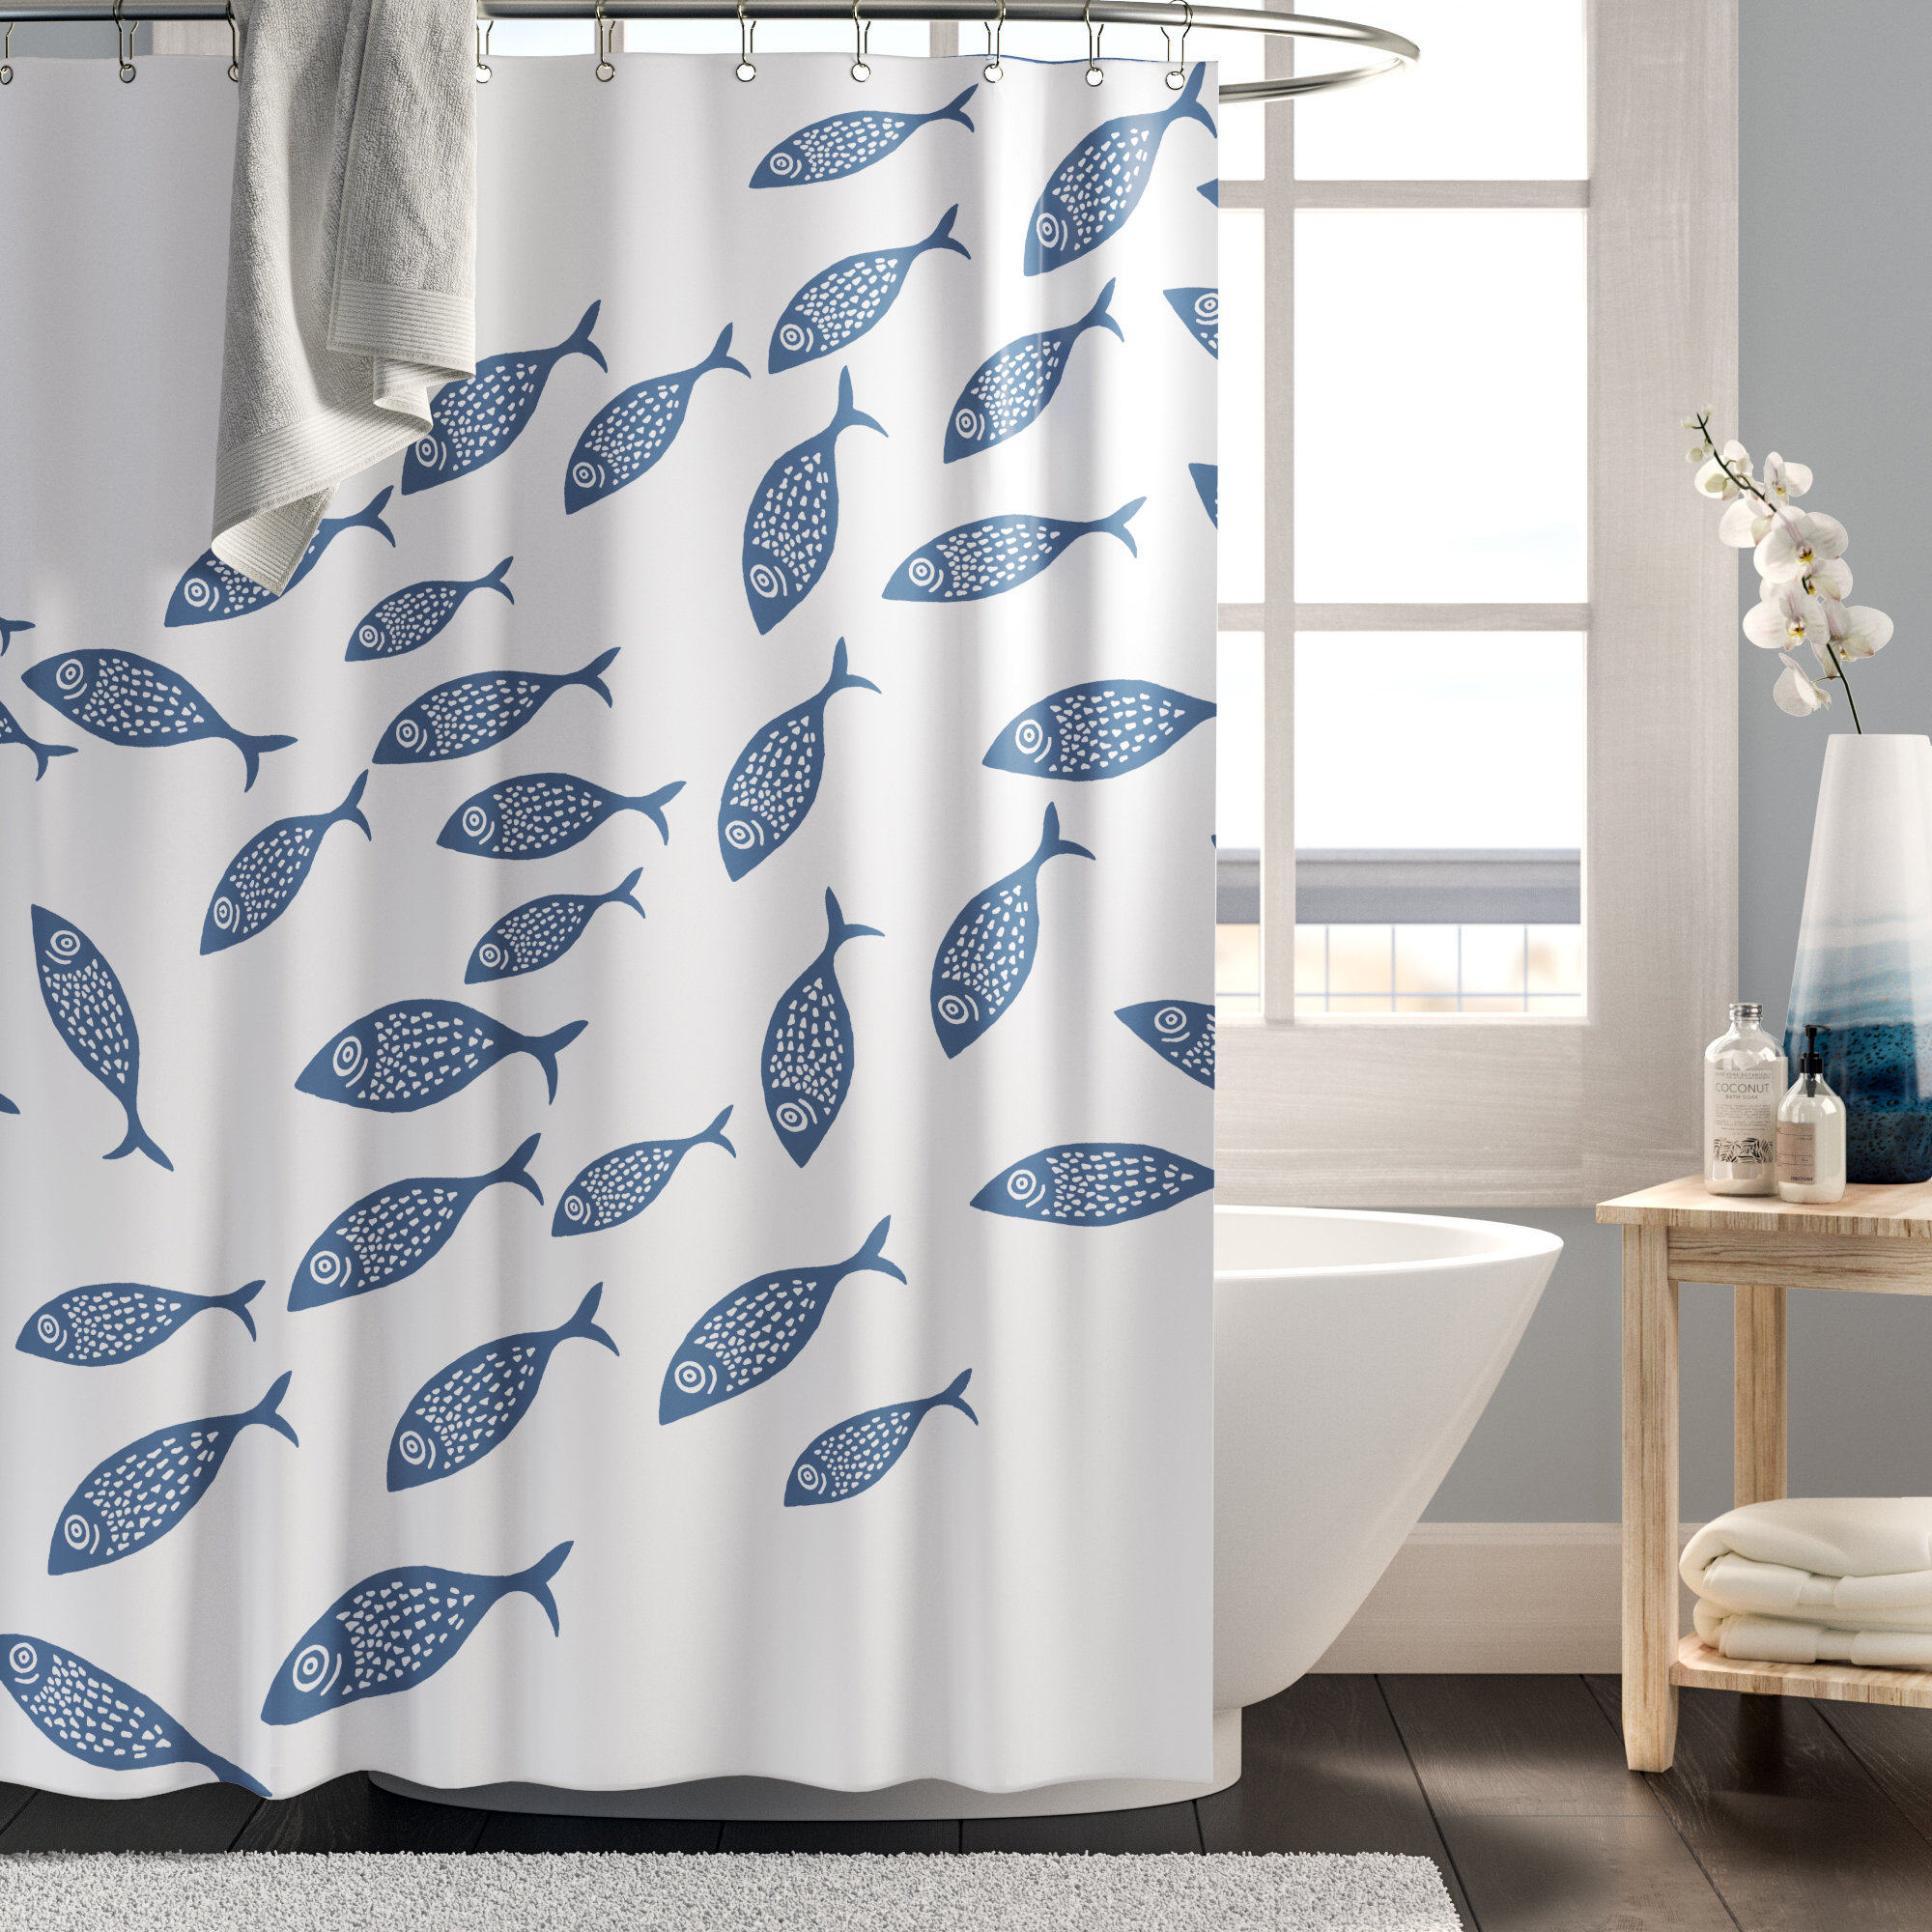 Colored Cartoon Sea Creatures Fish Flower Bathroom Fabric Shower Curtain Set 